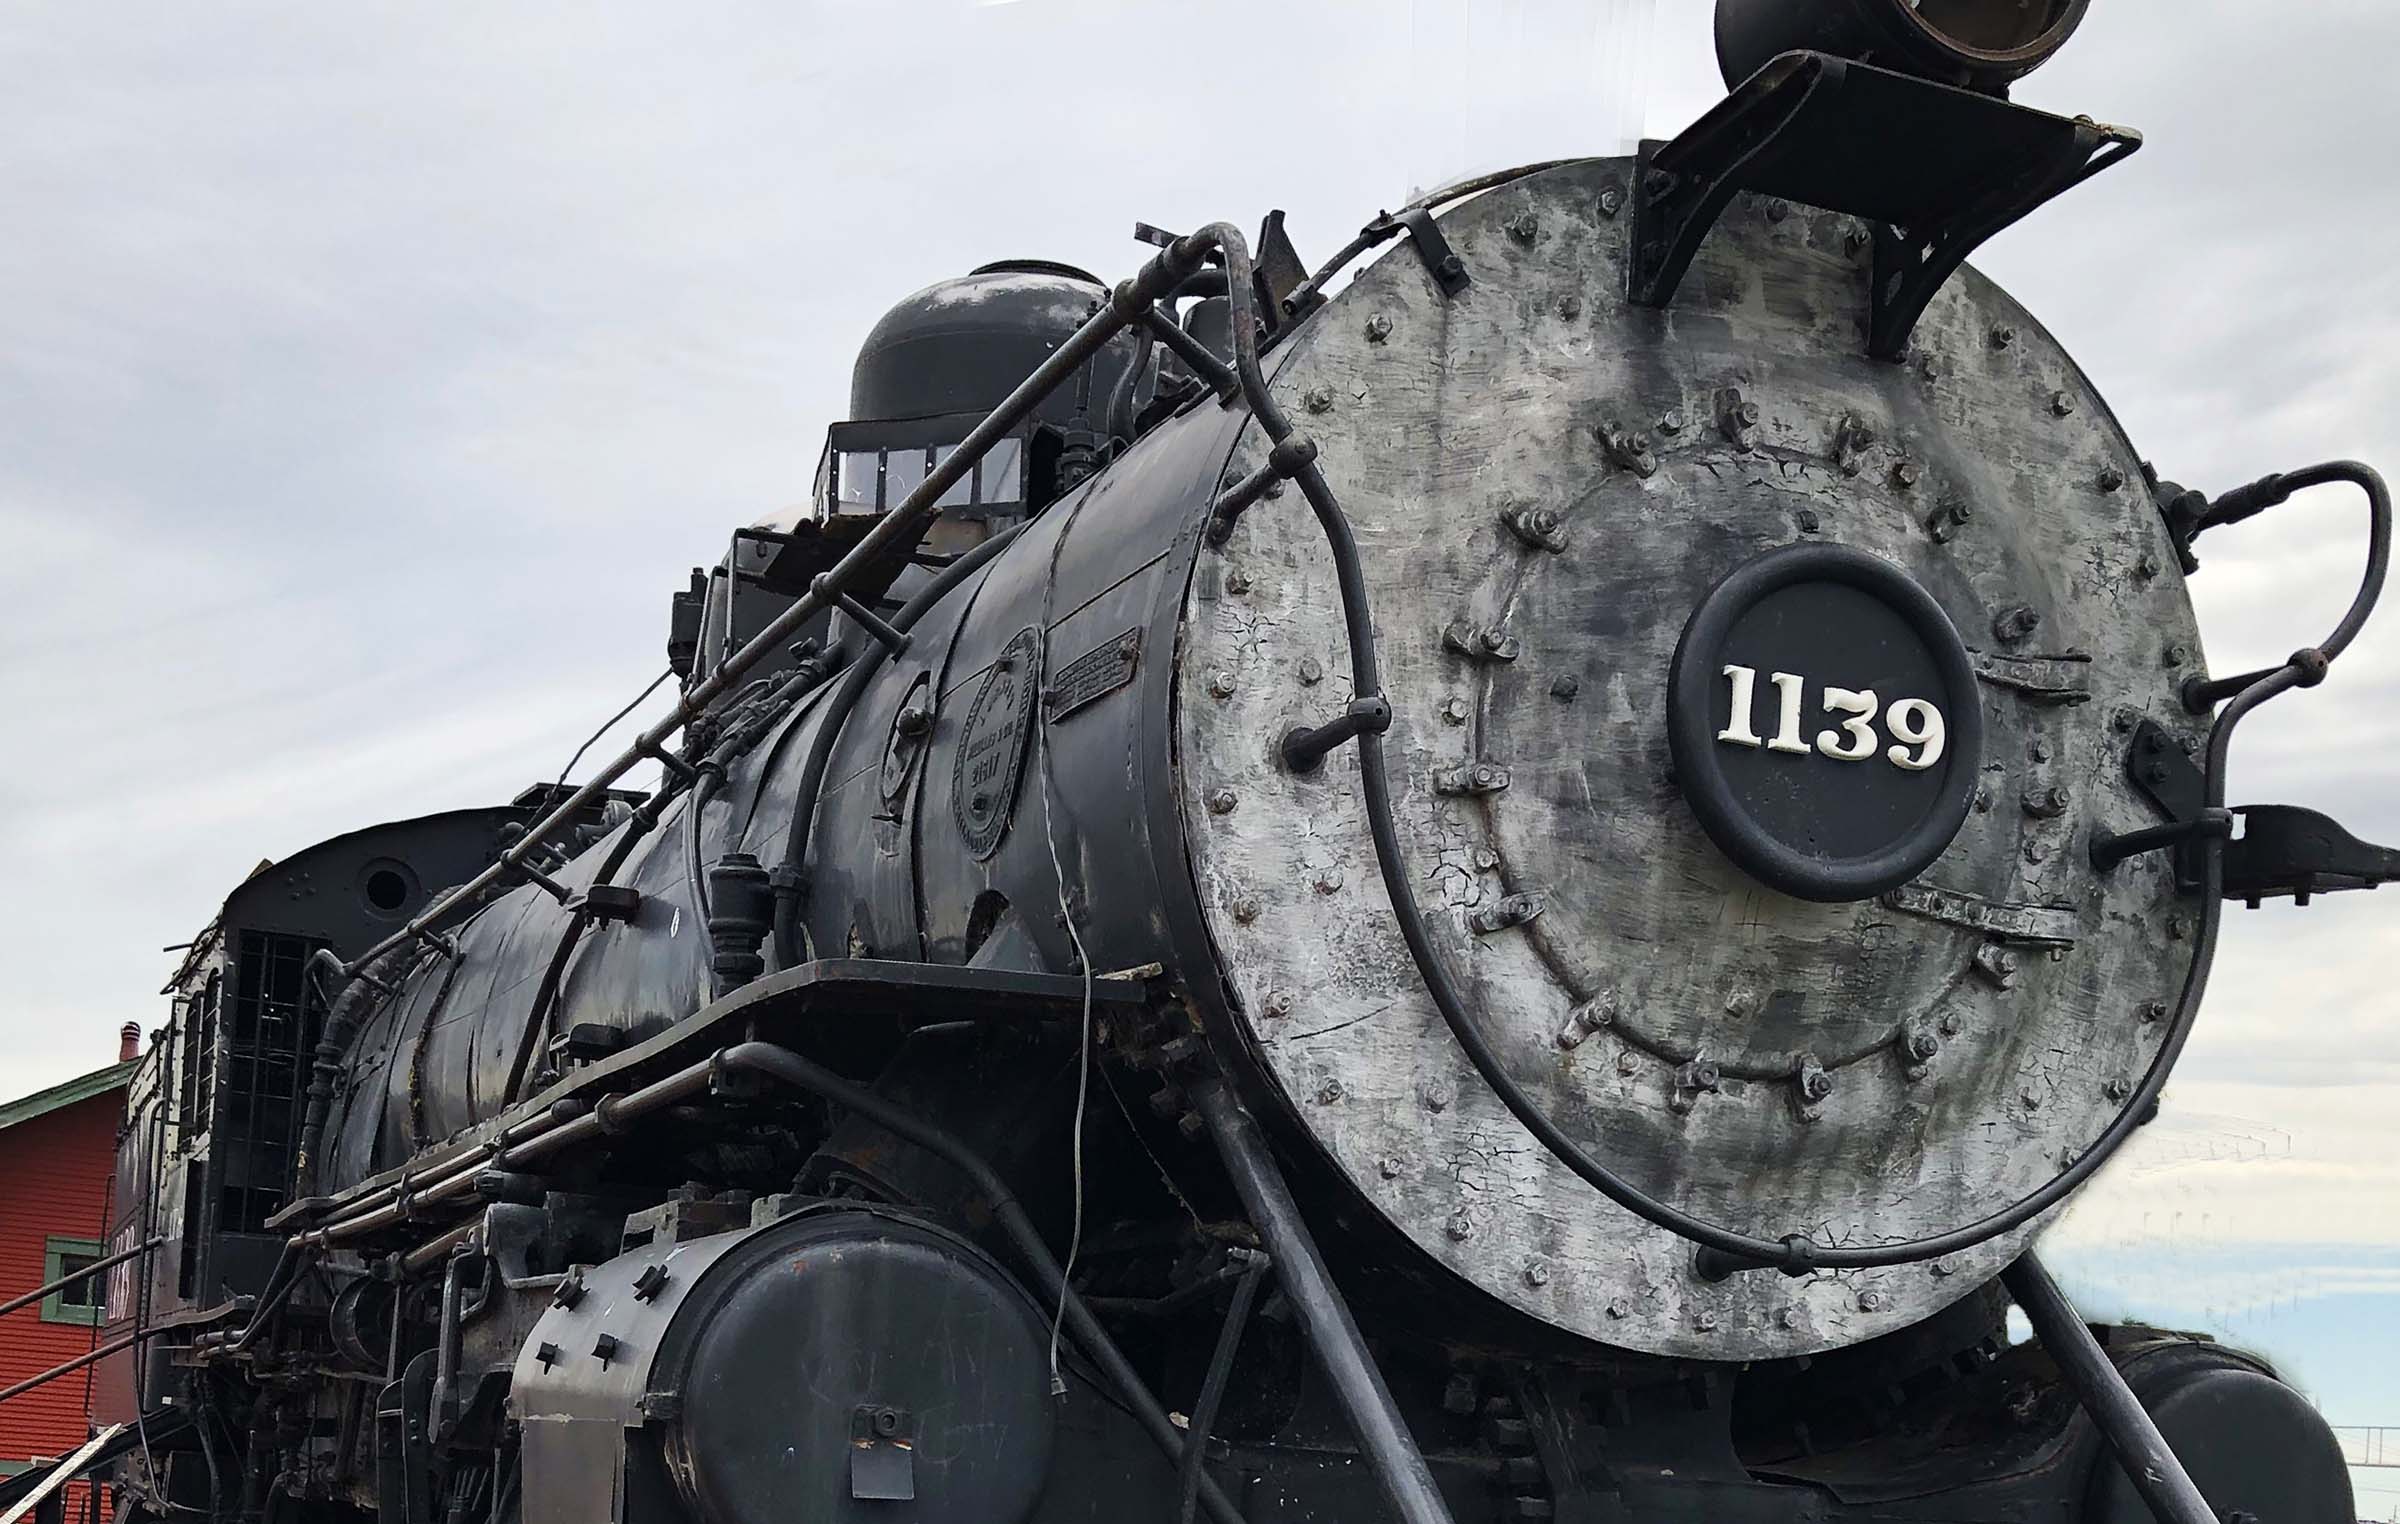 engine-dodge-city-1139-steam